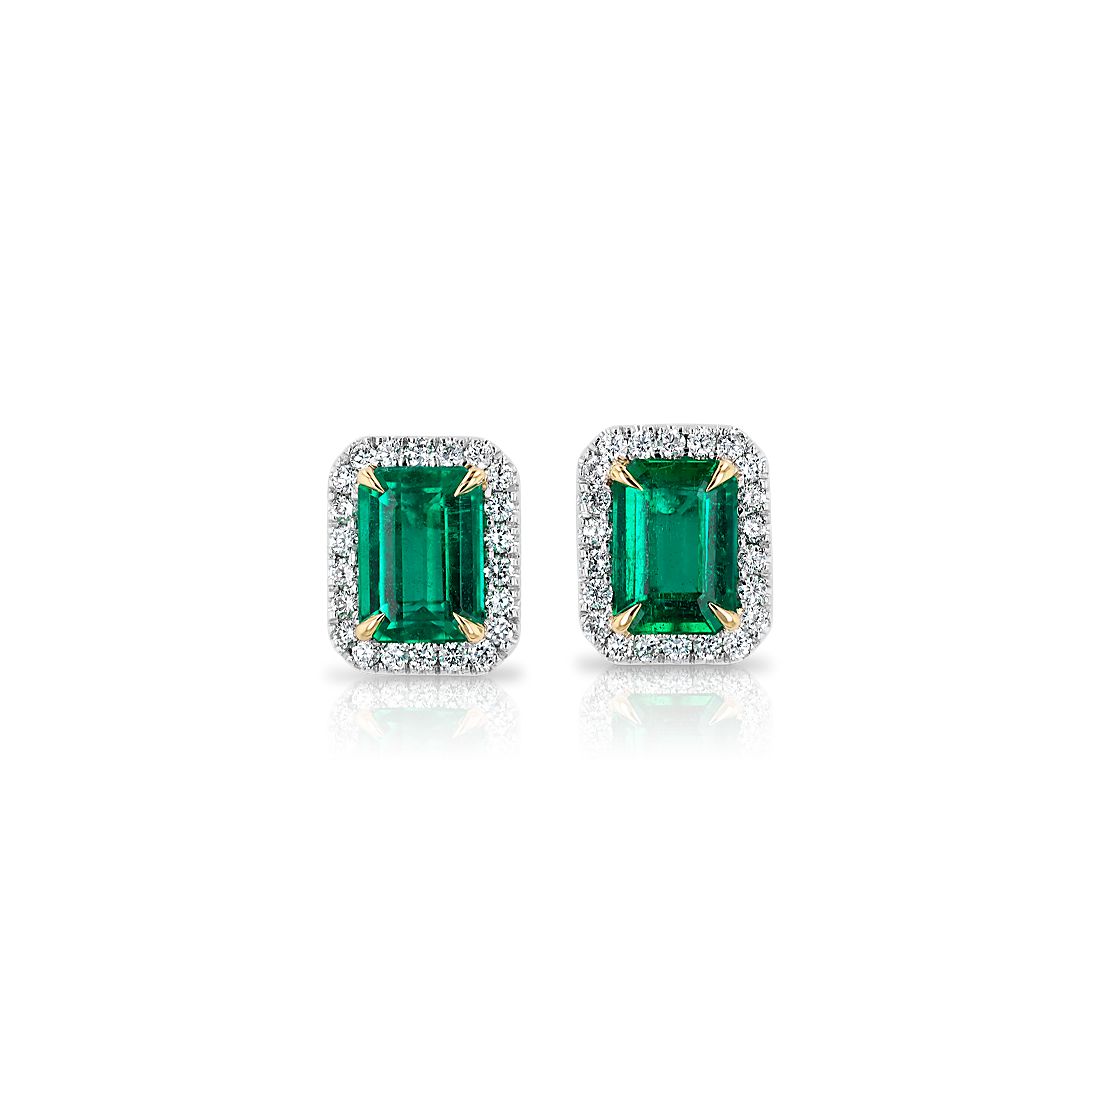 3 Ct Emerald Cut Green Emerald & Diamond Halo Stud Earrings 14K White Gold Over